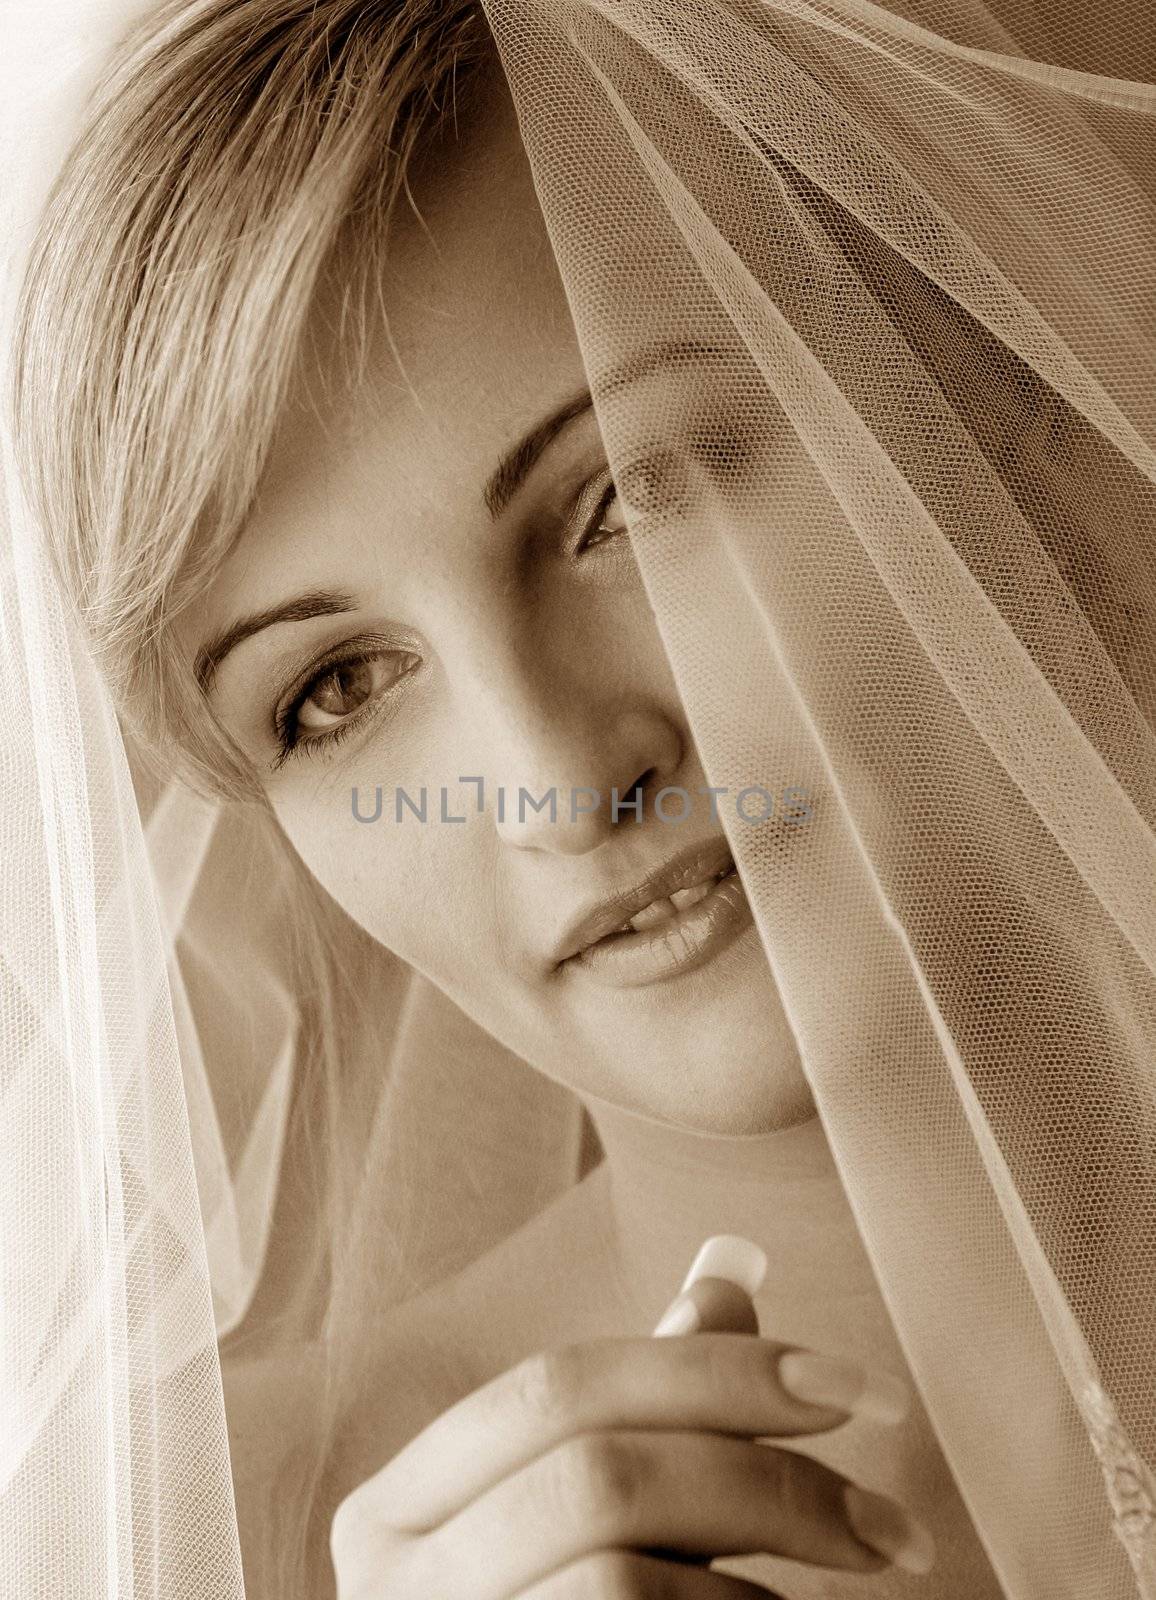 Sepia portrait of beautifusmiingl bride with veil.